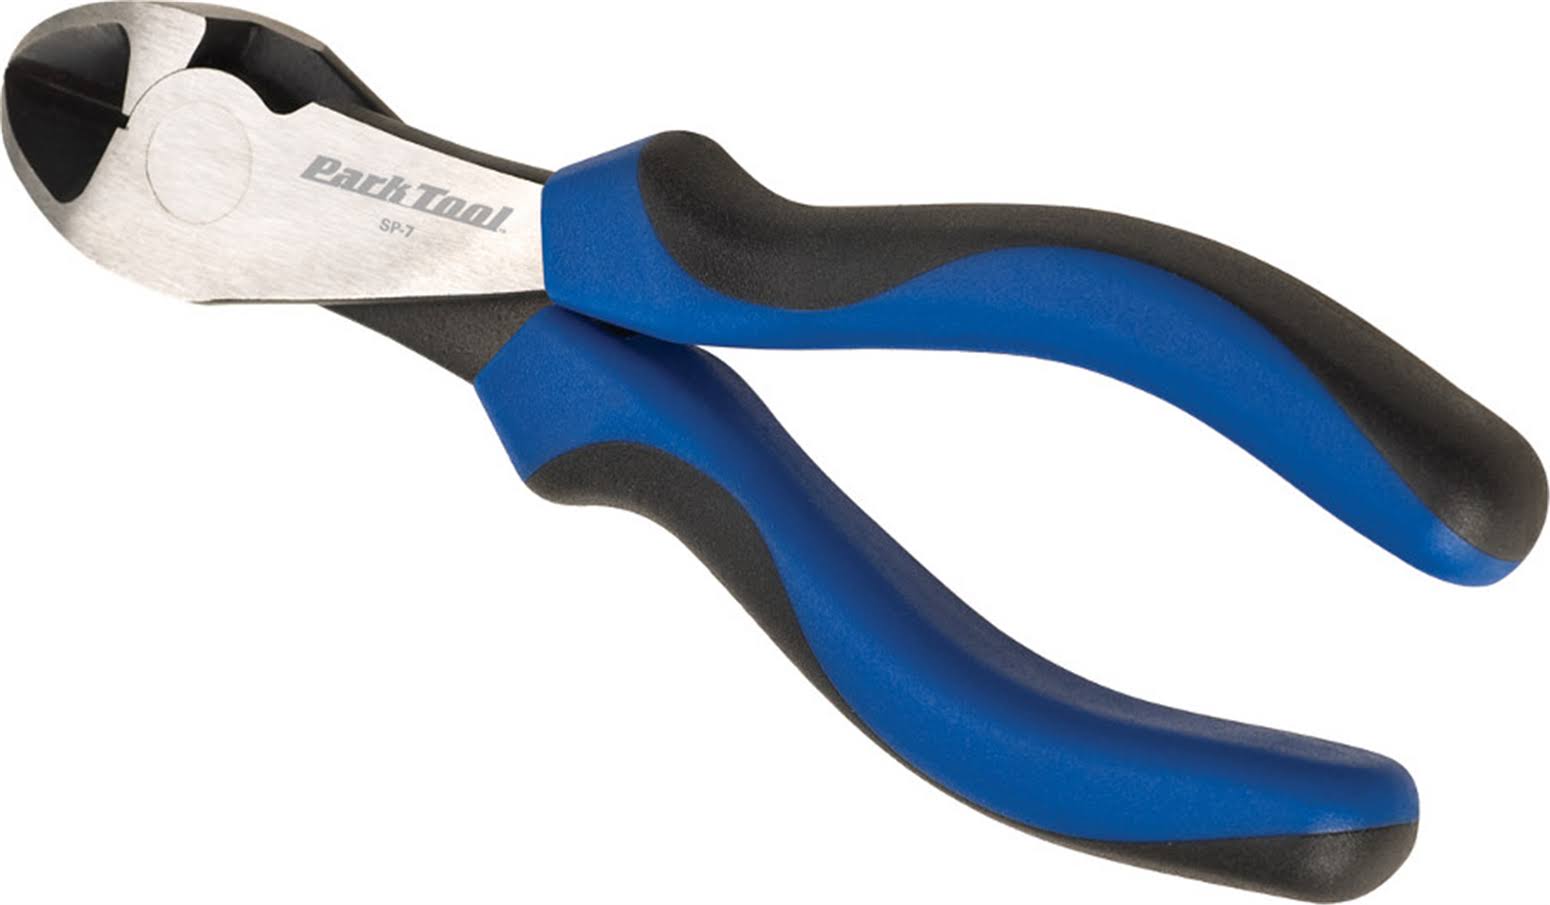 Park Tool Side Cutter Pliers - Blue